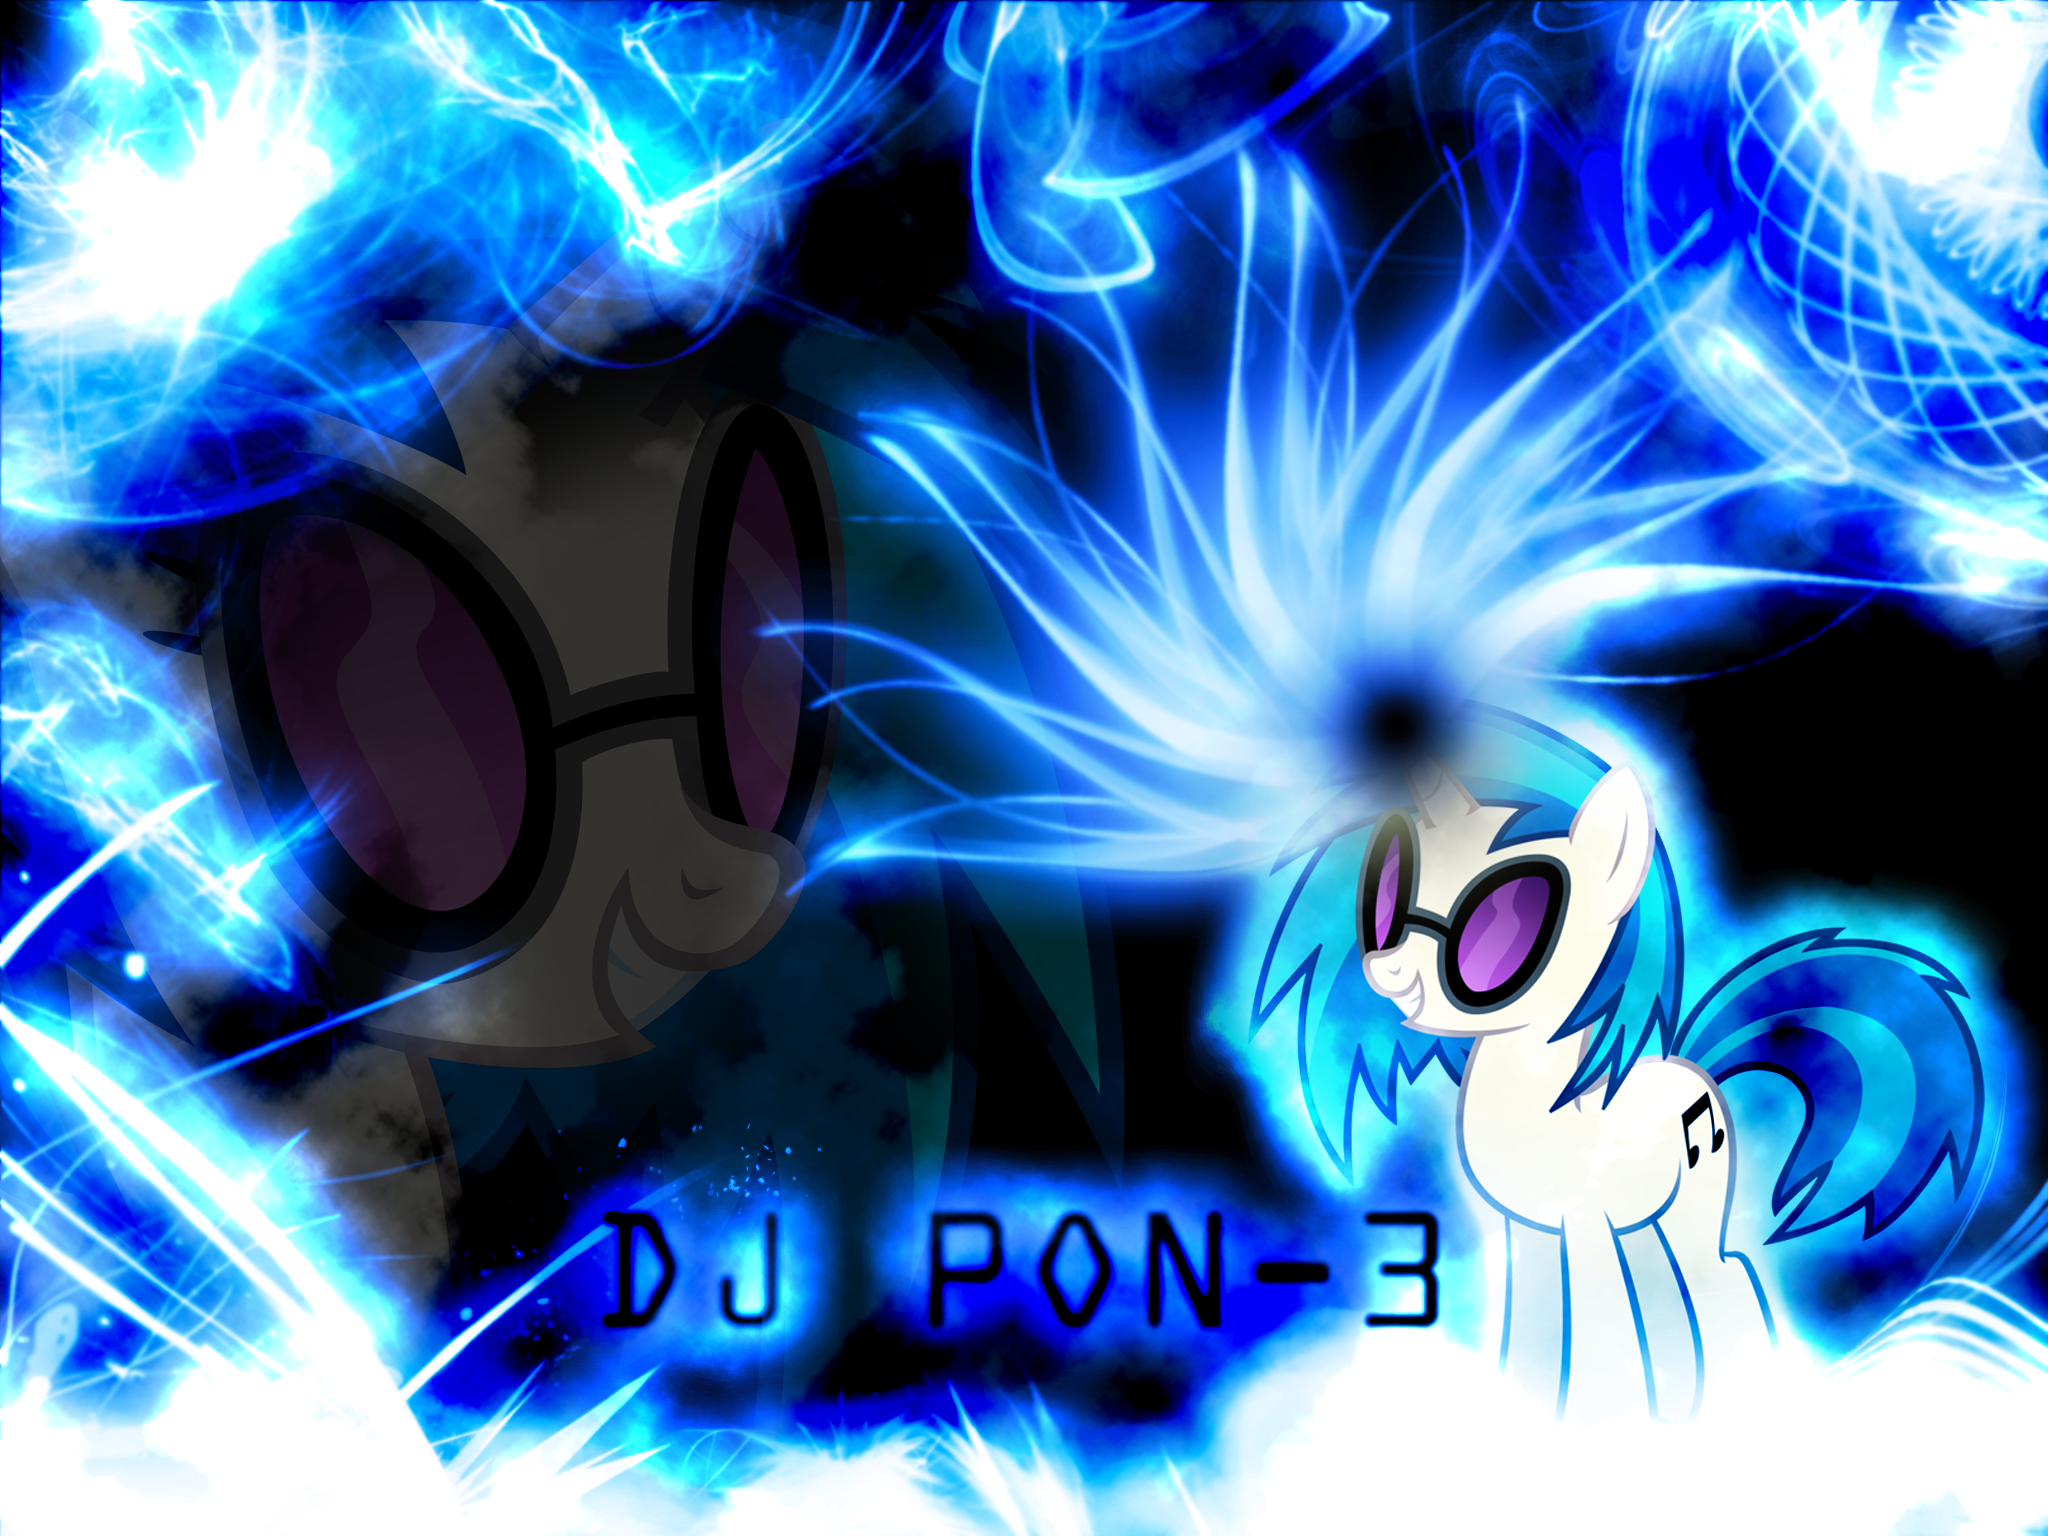 DJ PON 3 I Pad Wallpaper 2048x1536 by Arakareeis on DeviantArt